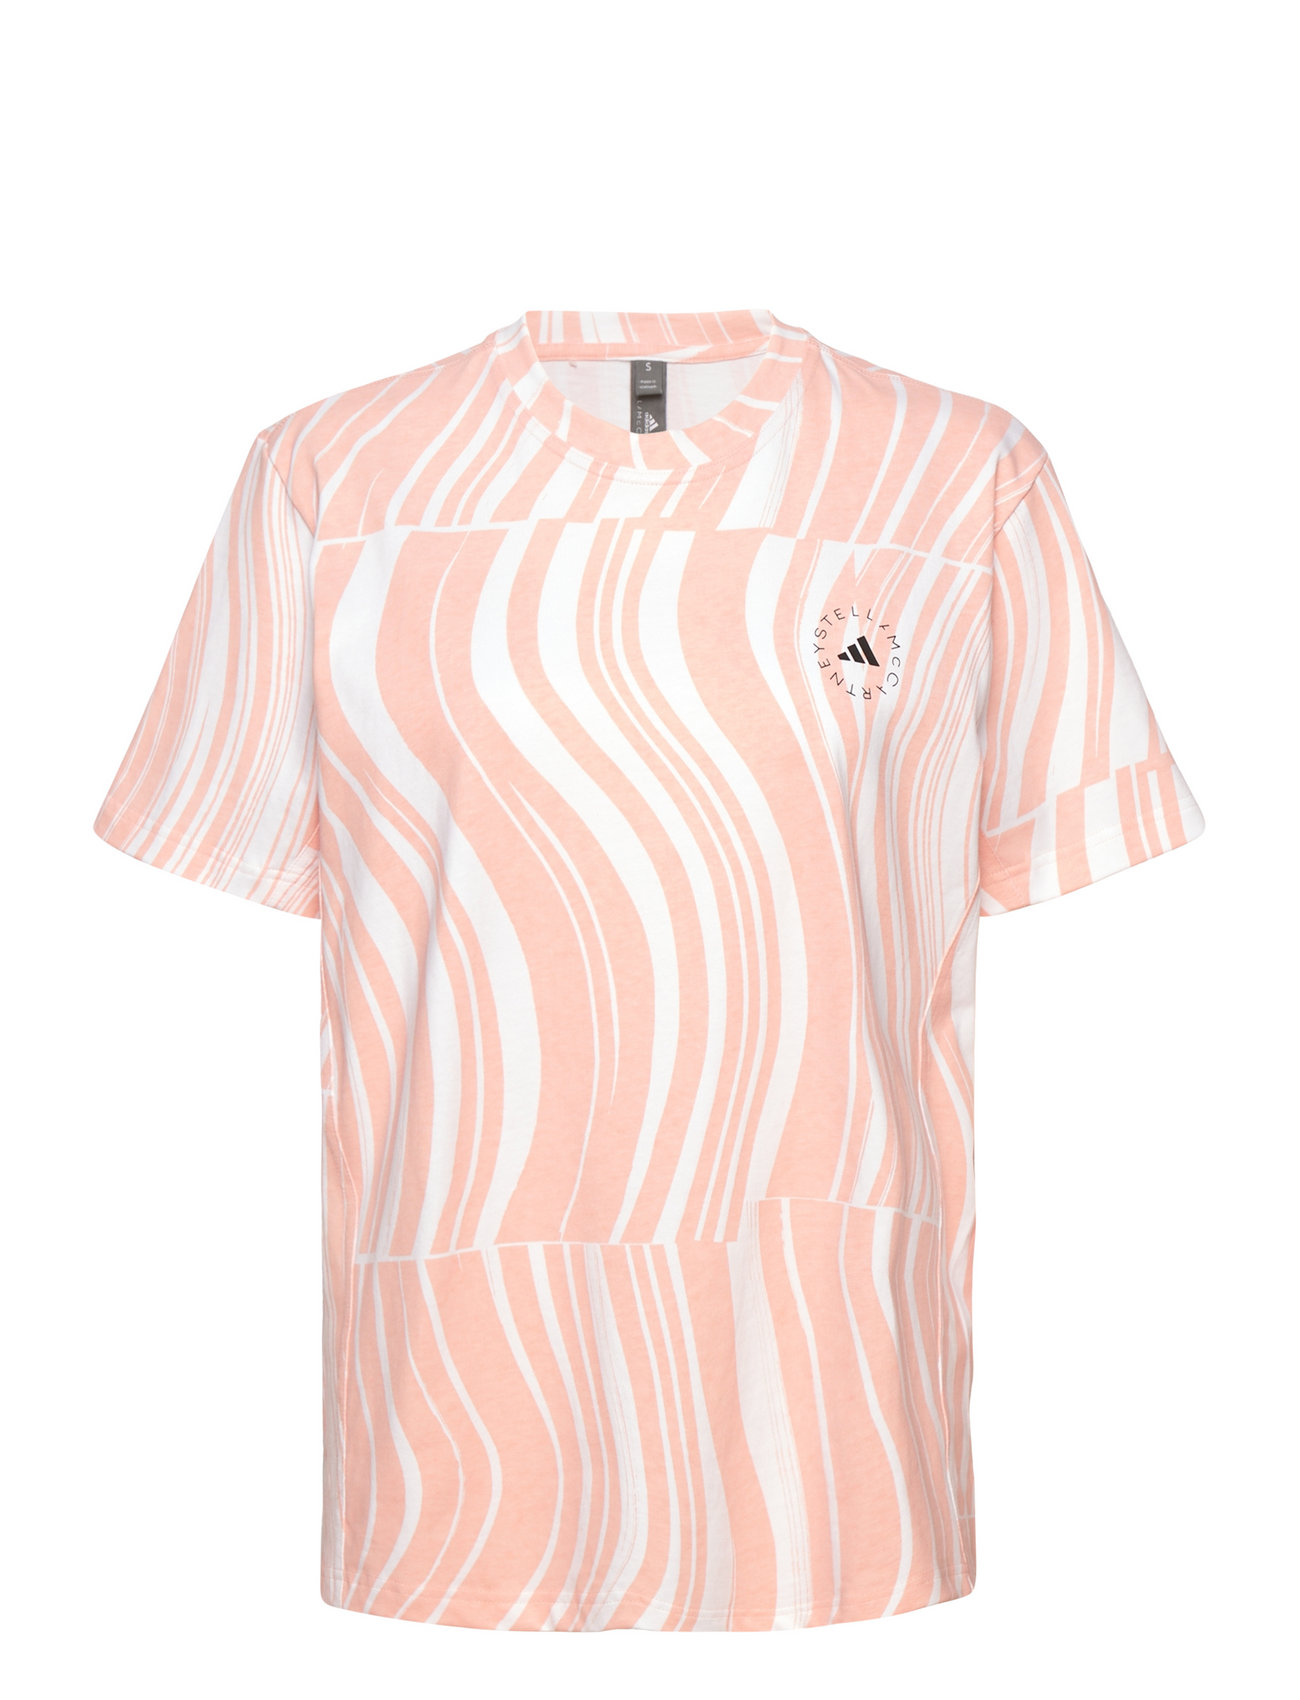 Asmc Gr Tee Sport T-shirts & Tops Short-sleeved Pink Adidas By Stella McCartney